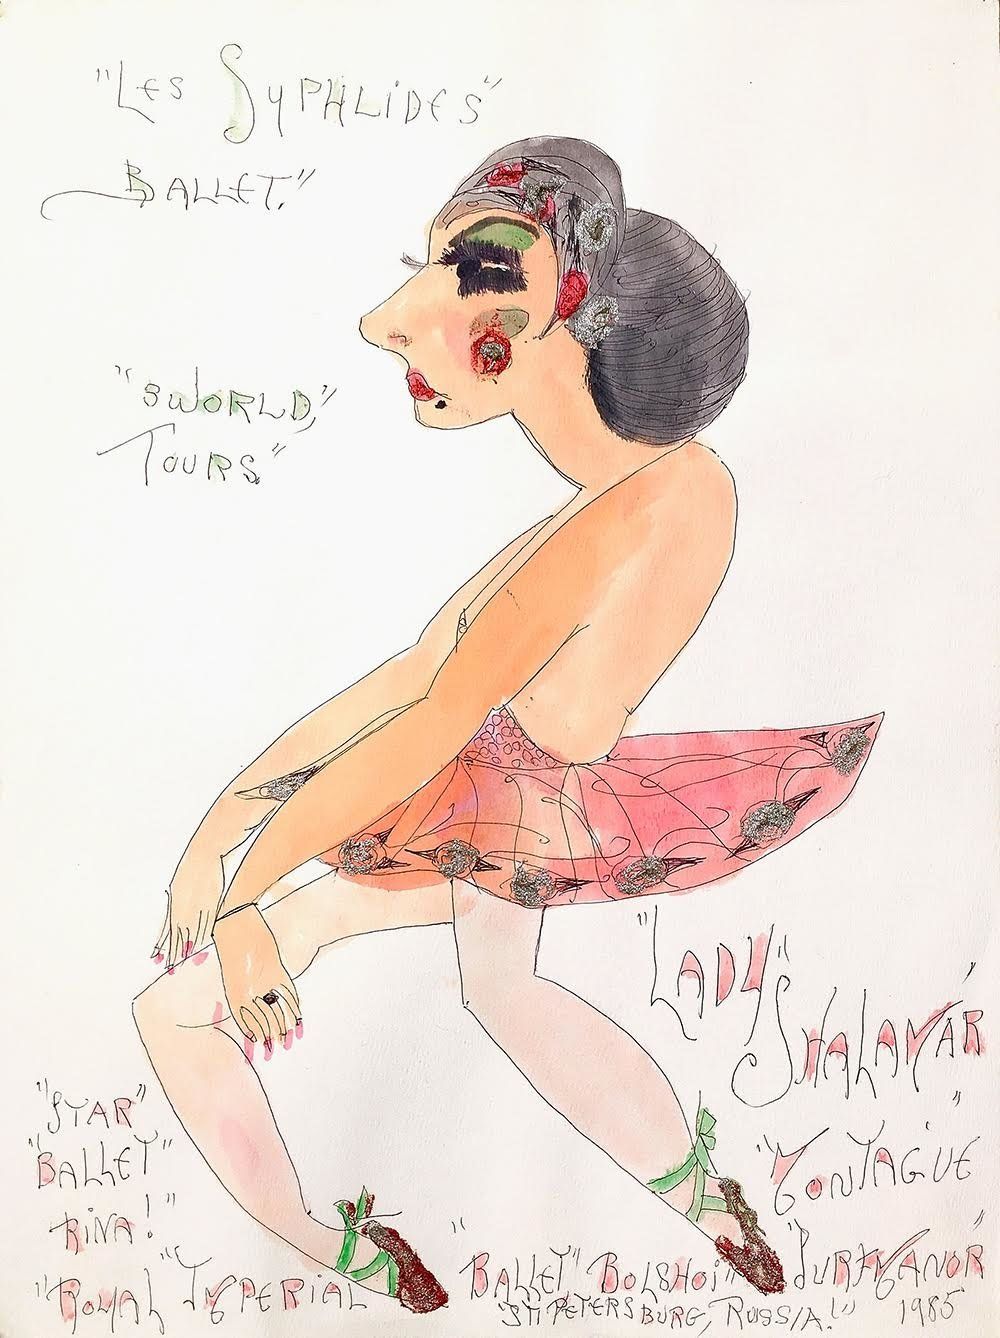 Lady Shalimar Frances Montague, "Les Sylphildes Ballet 3 World Tours Star Balletrina" 1985 watercolor ballpoint glitter on paper